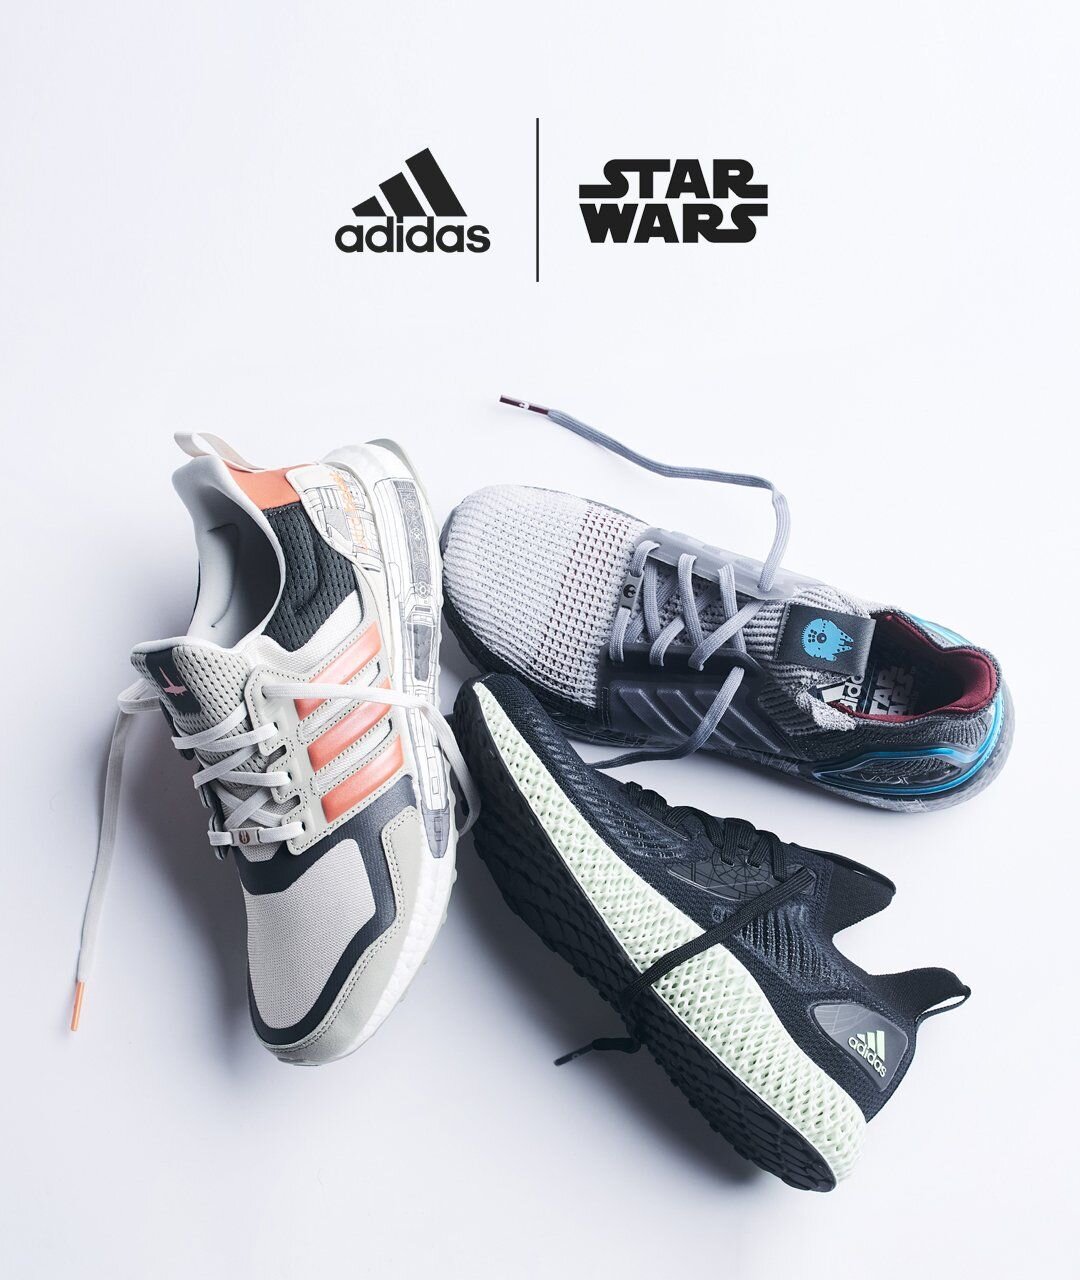 adidas star wars sale